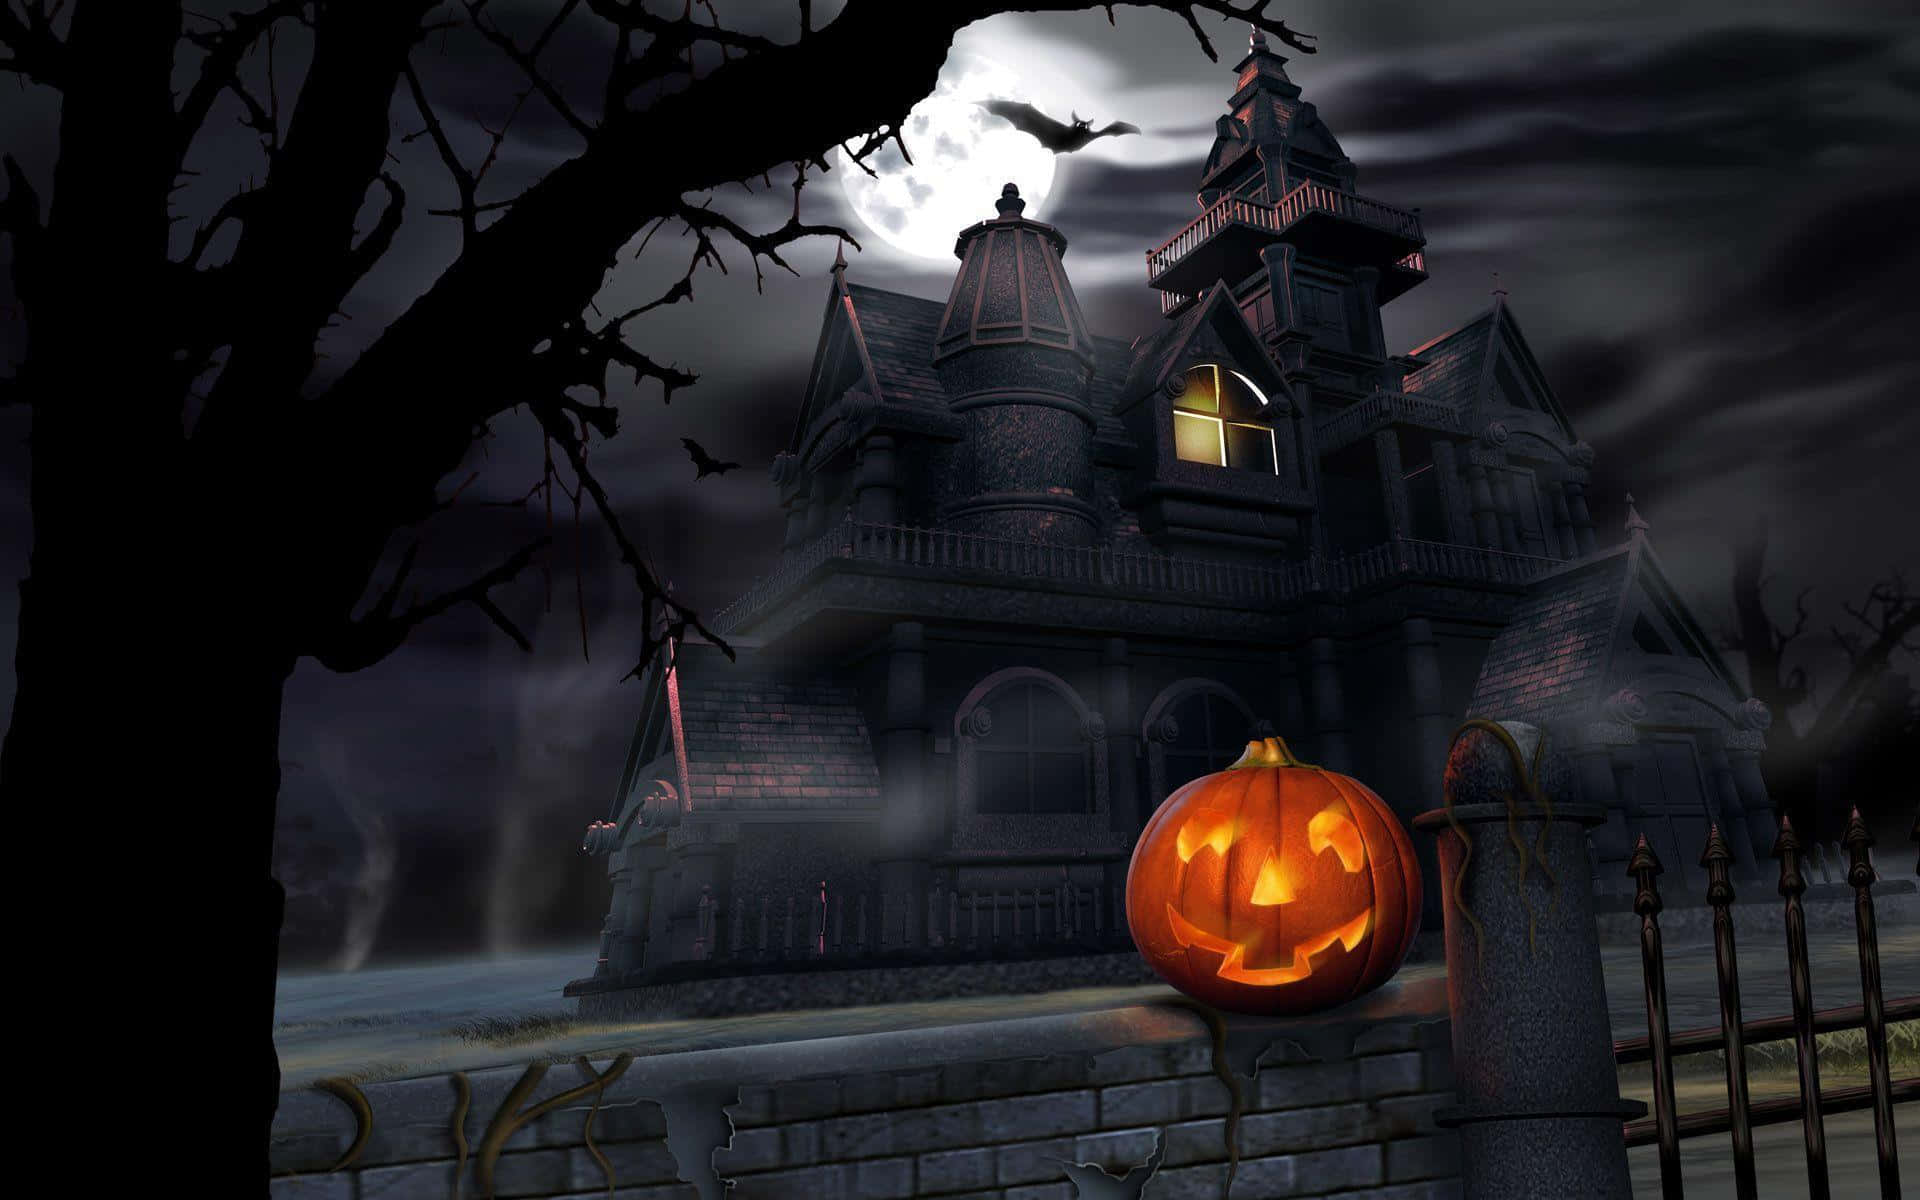 Fear not, Halloween's lurking around the corner!